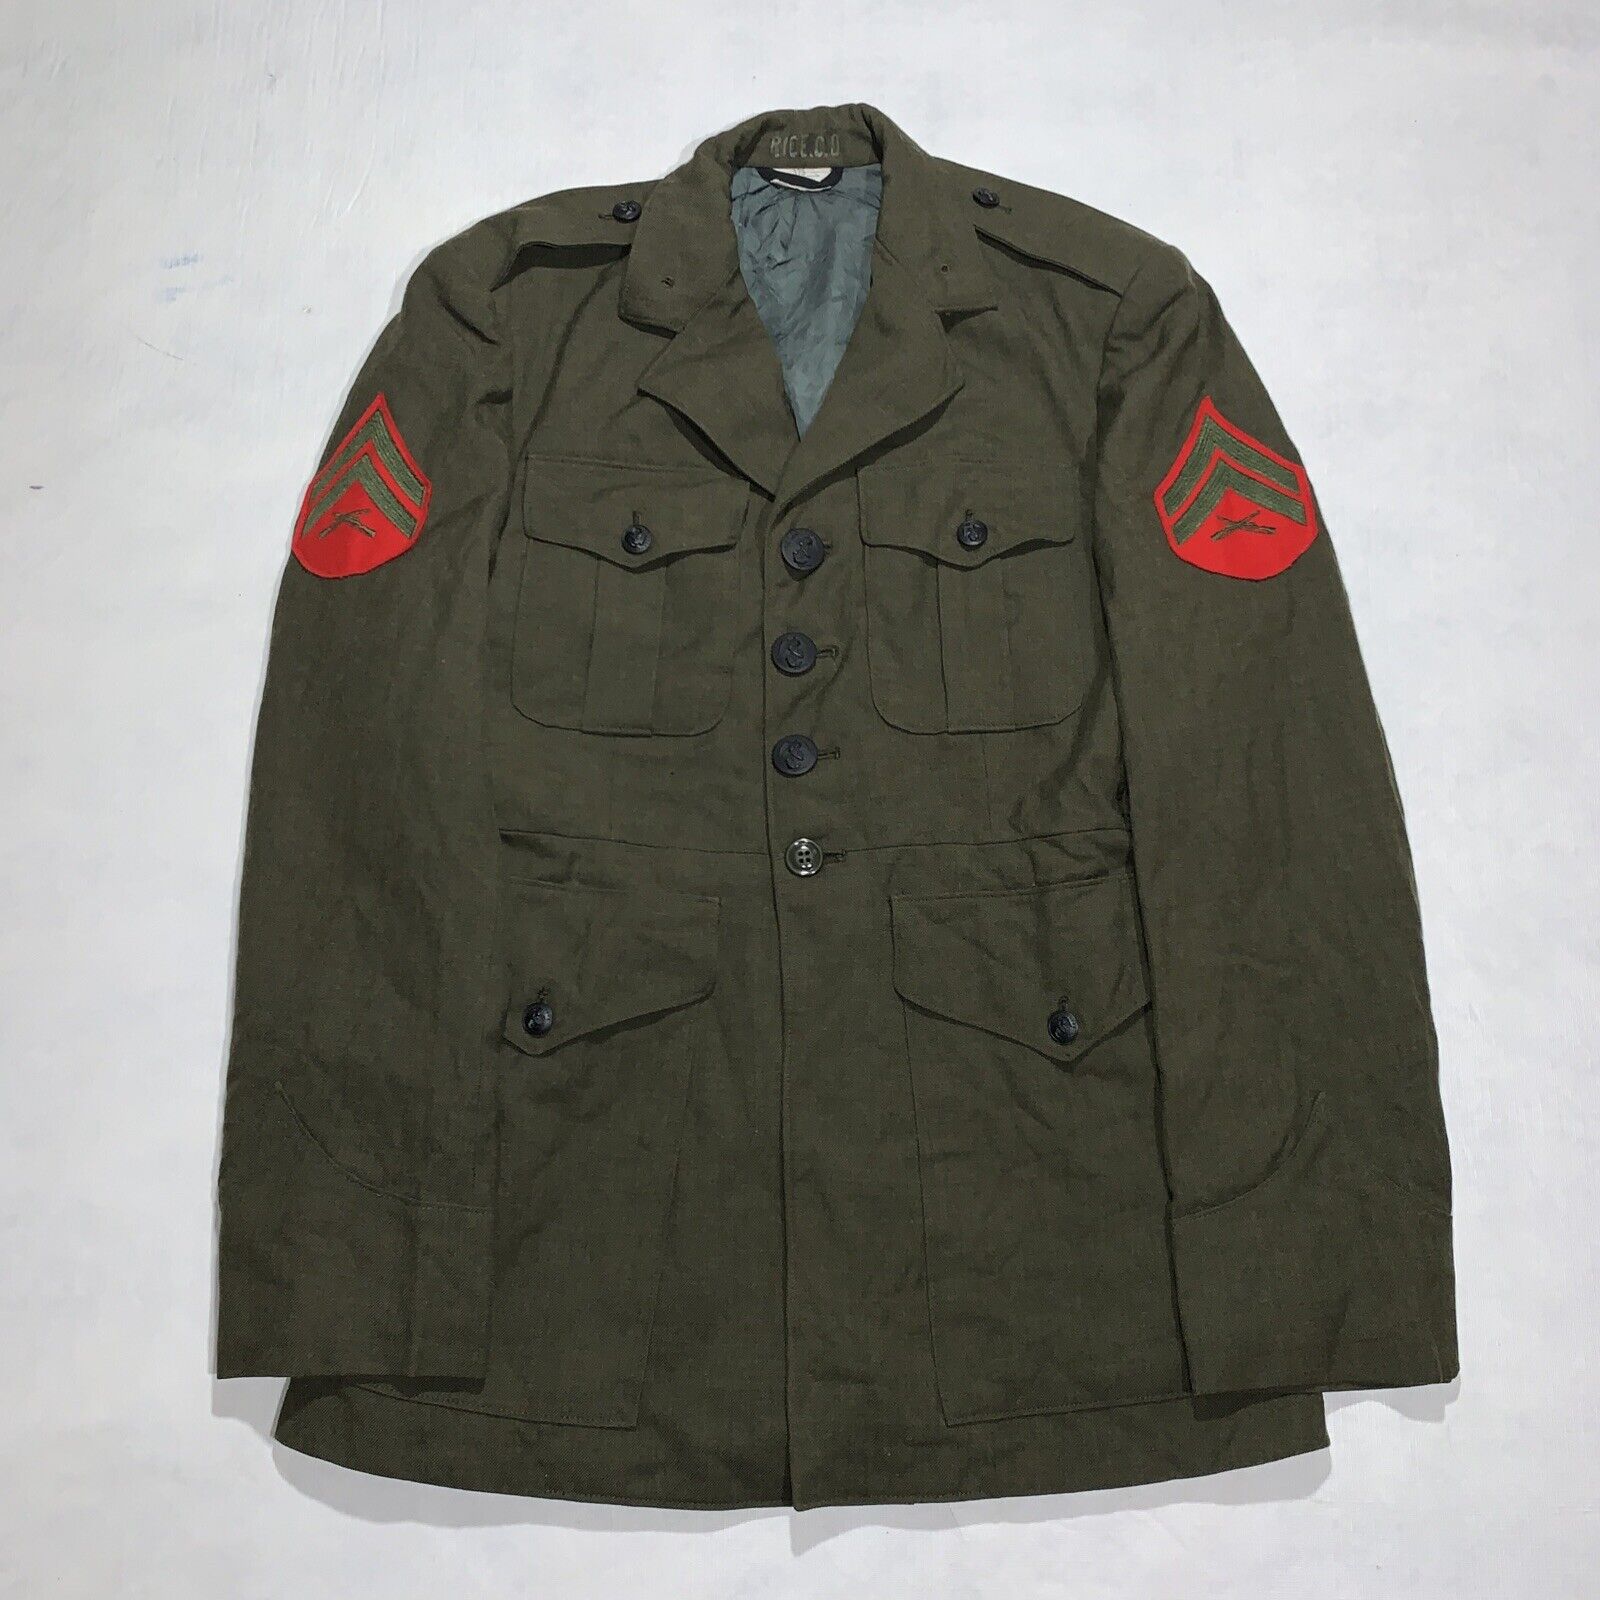 Vintage US Marine Corps Military Men’s Green Coat Class A Dress Uniform Size 37S